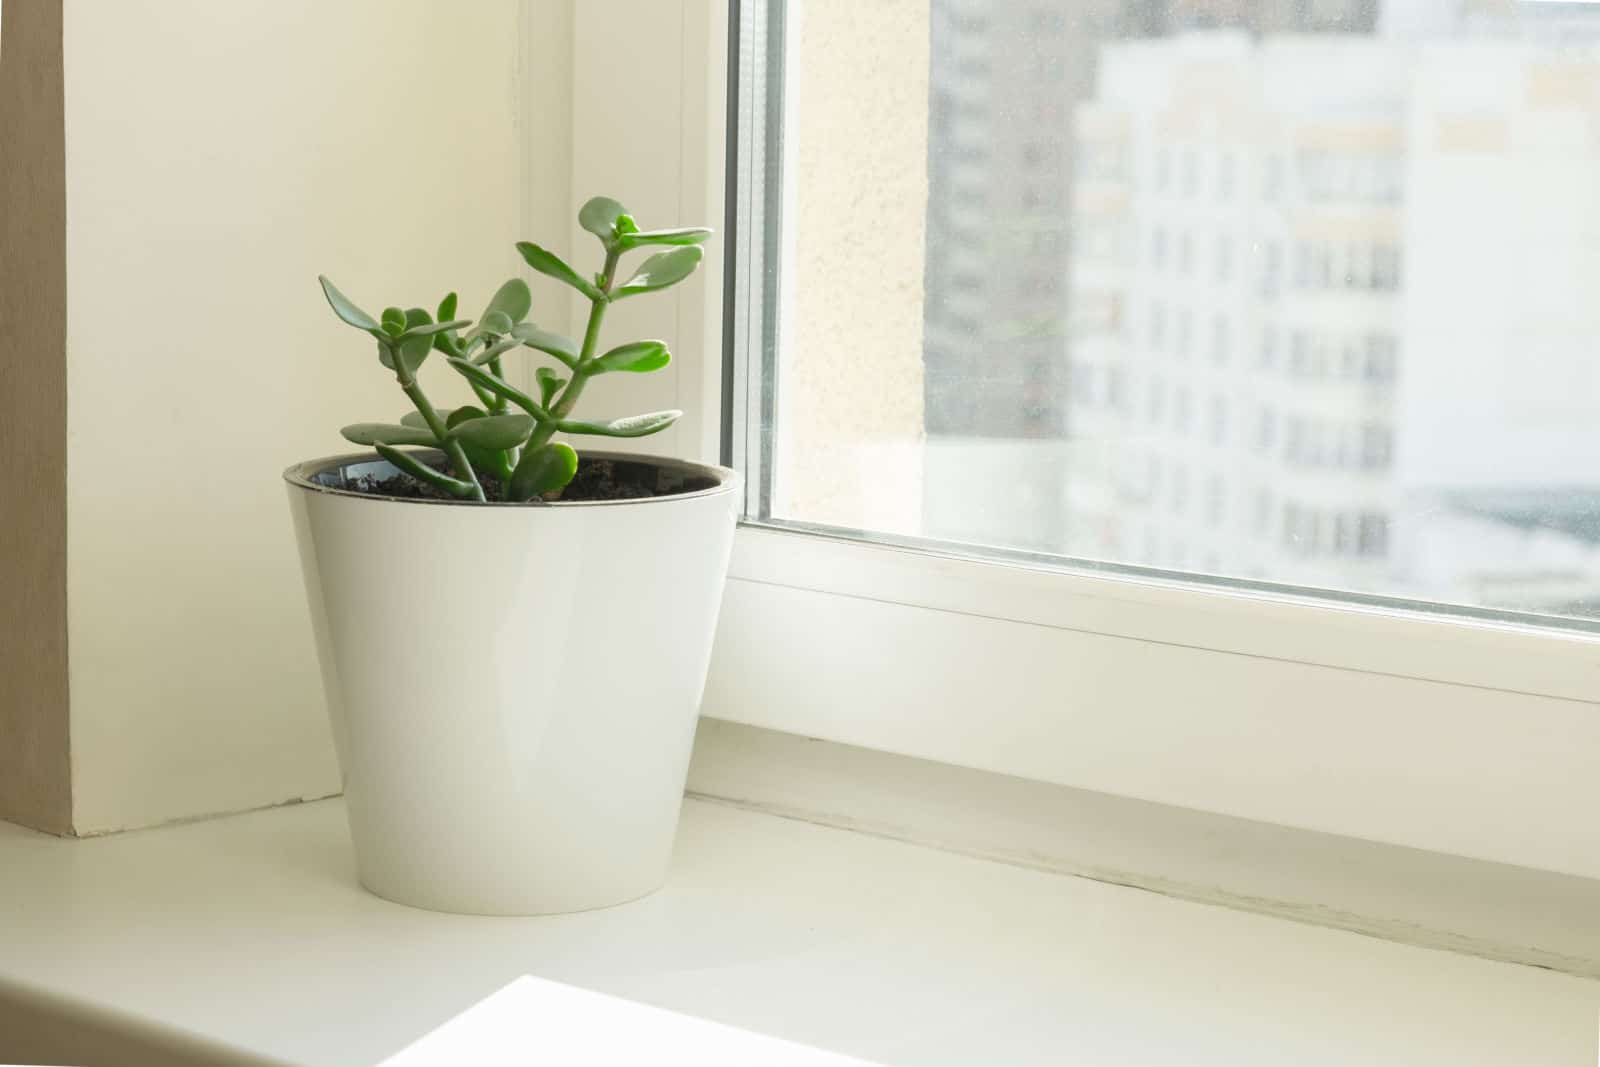 Crassula in a white flower pot stands on a windowsill.